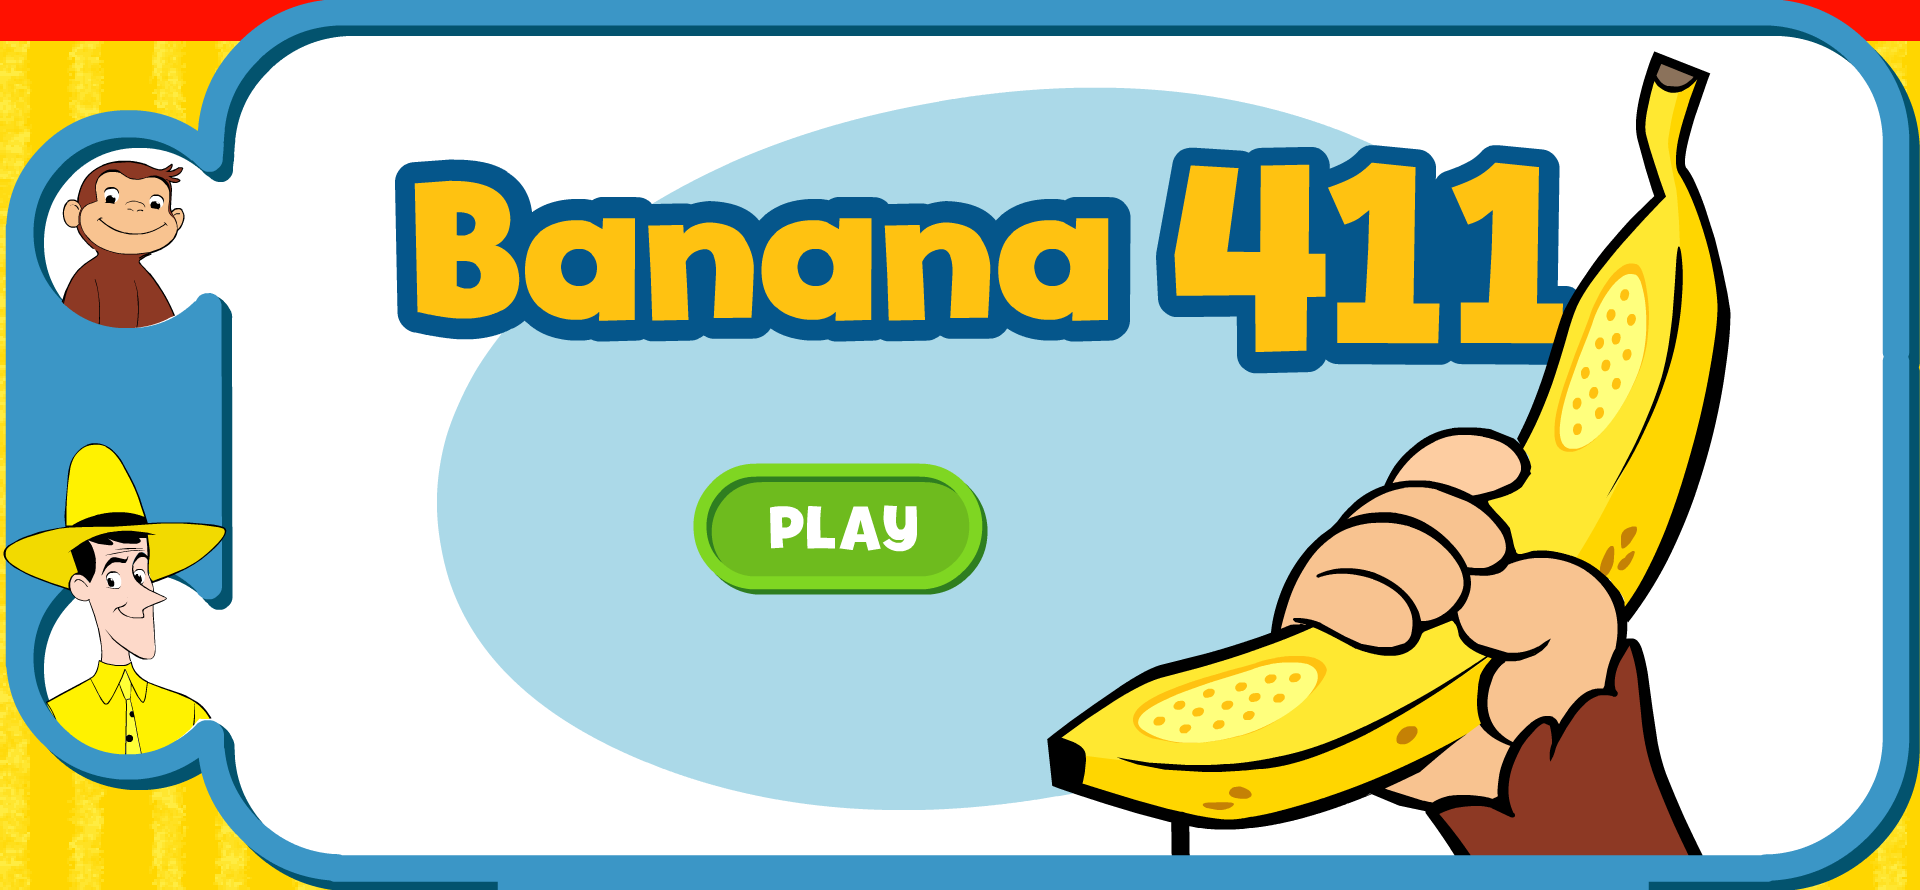 Banana 411 curious george